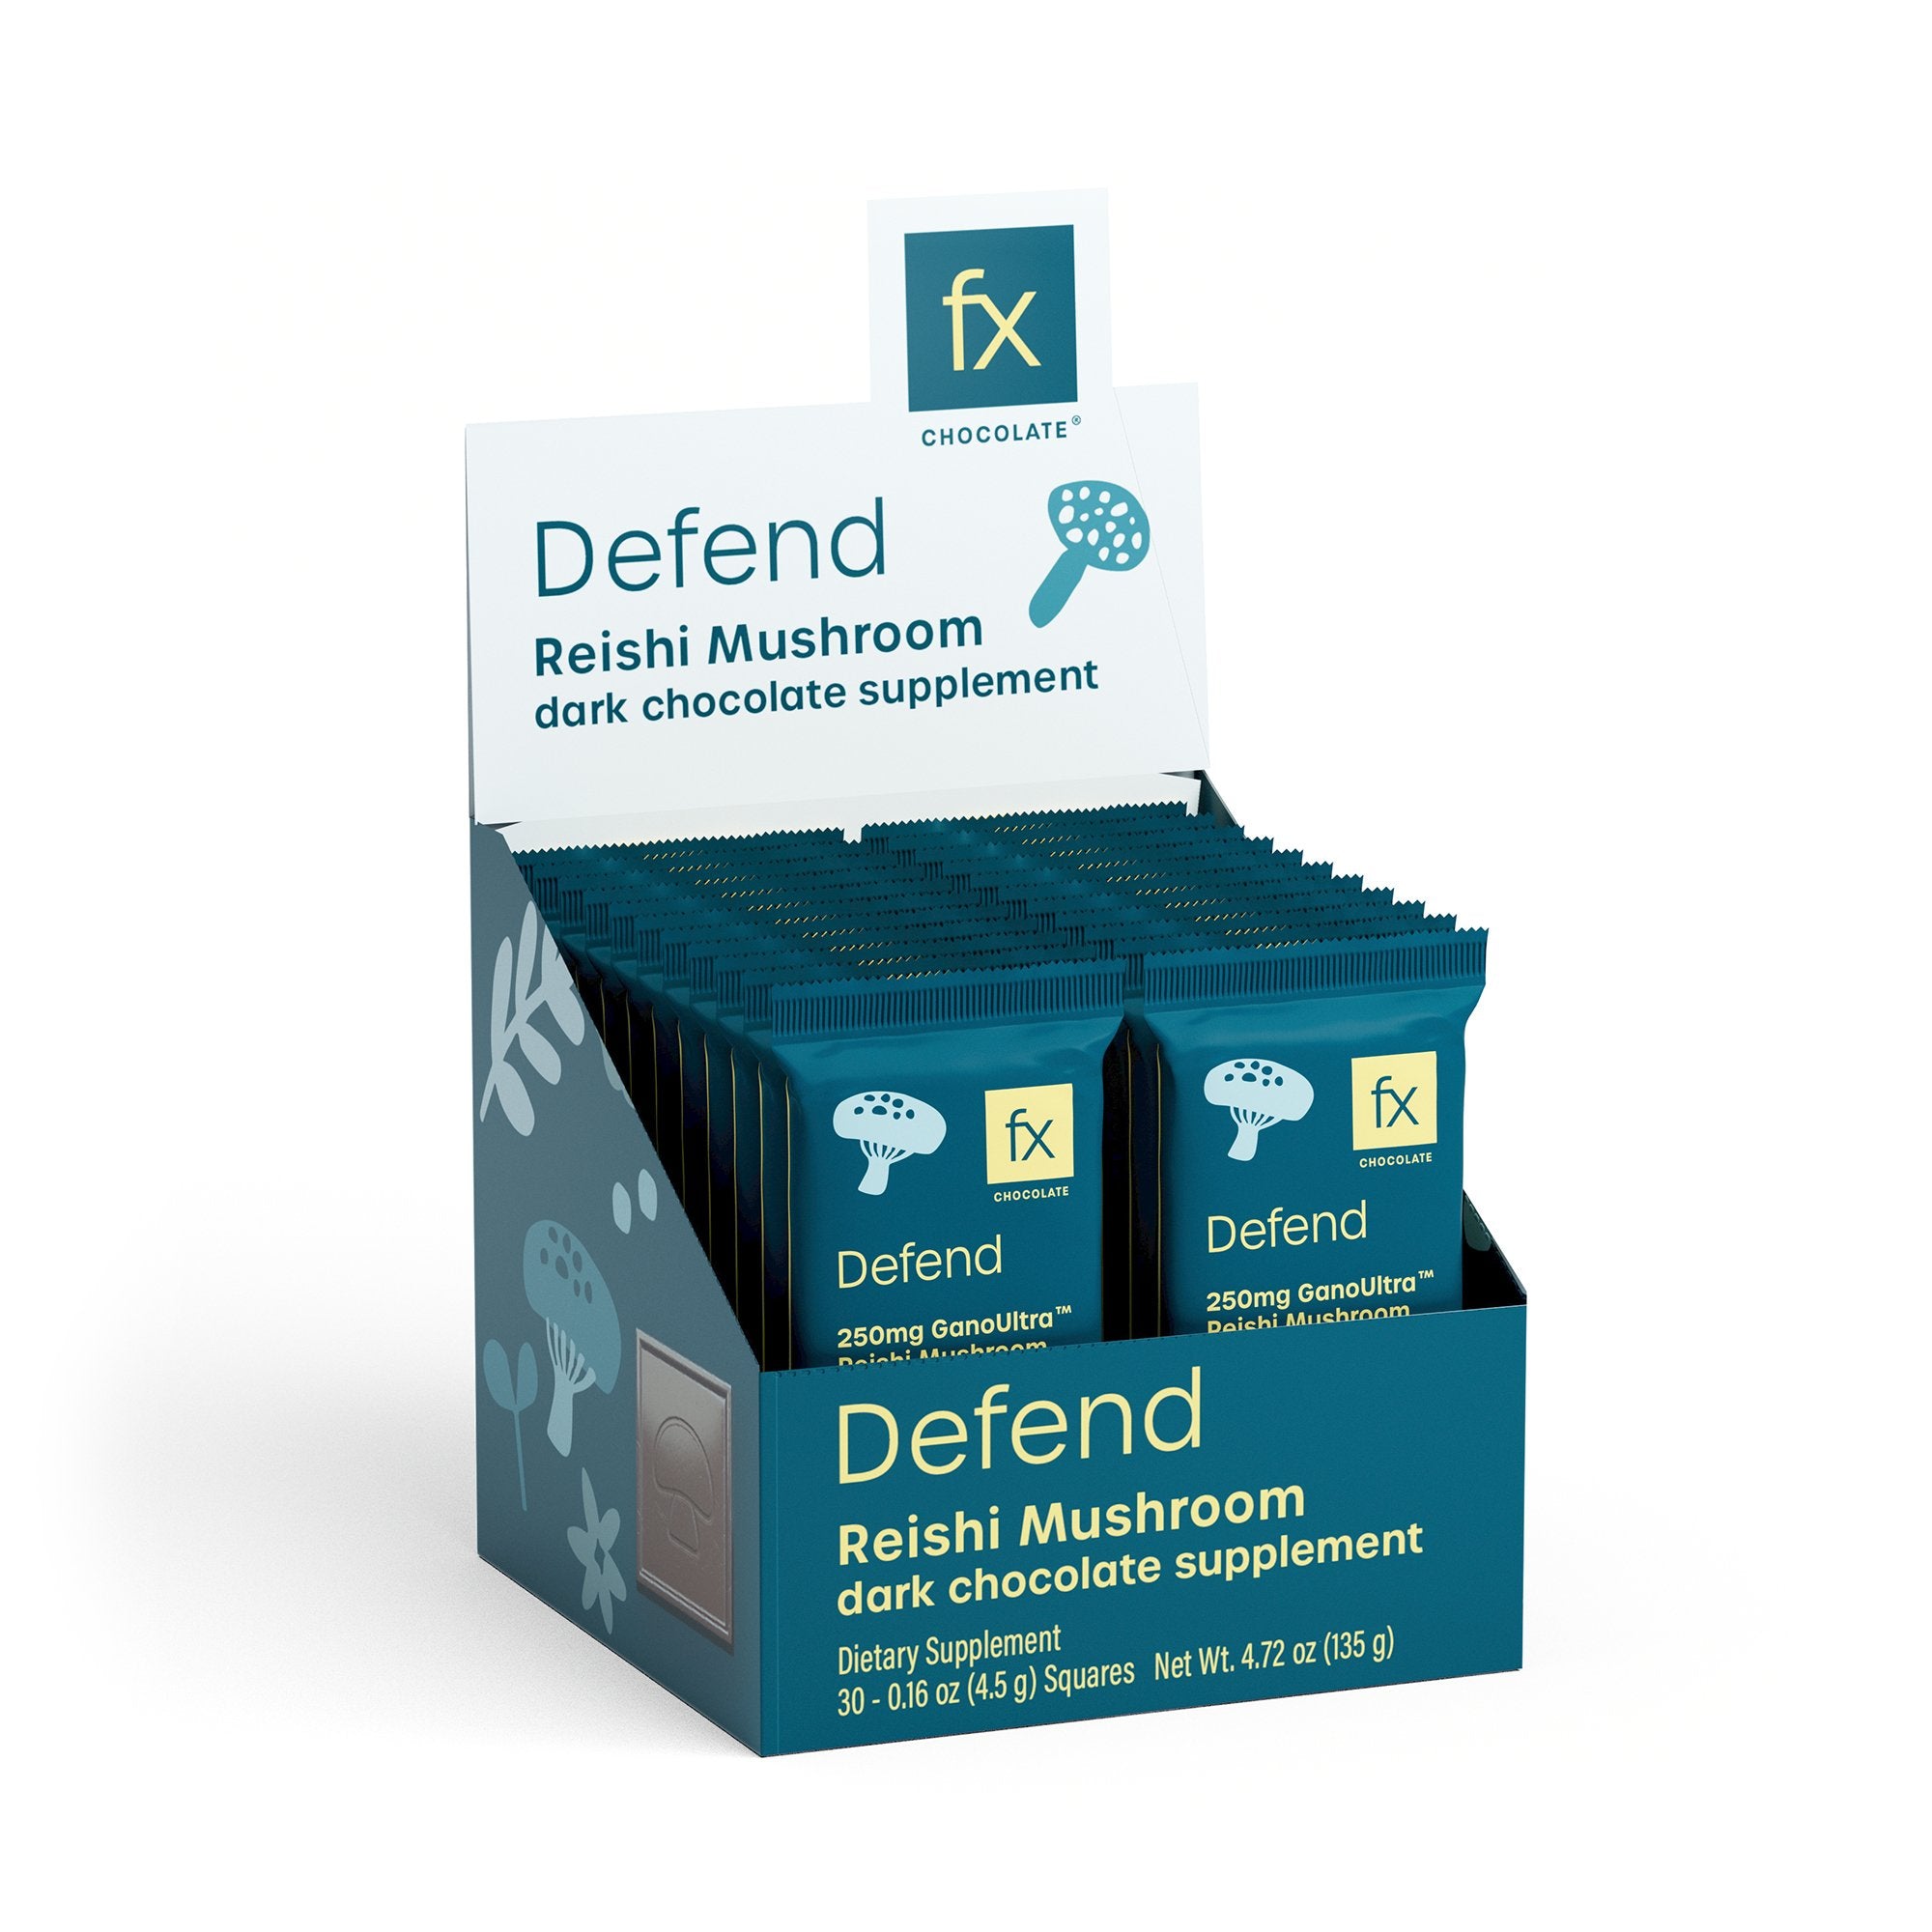 Copy of Defend